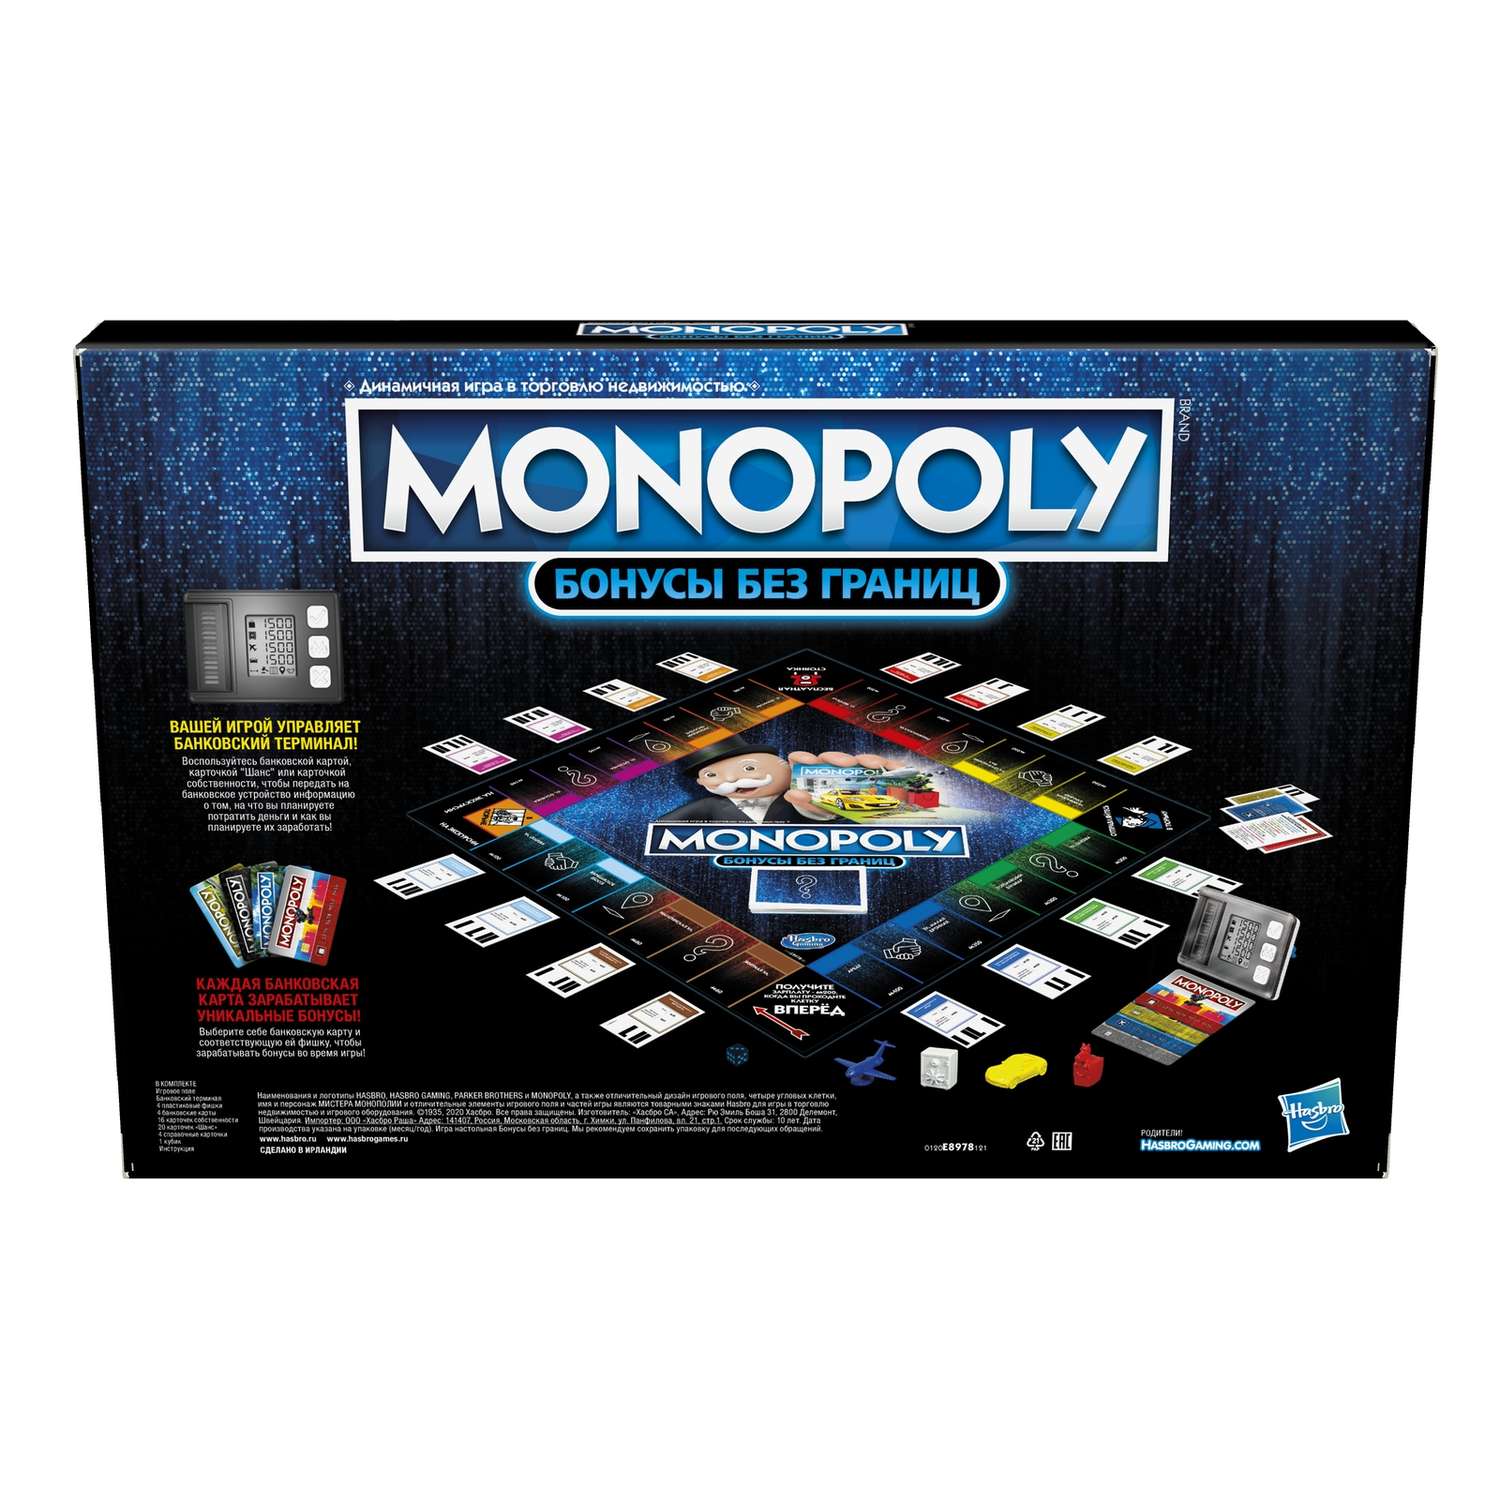 Игра настольная Monopoly Монополия Бонусы без границ E8978121 - фото 3